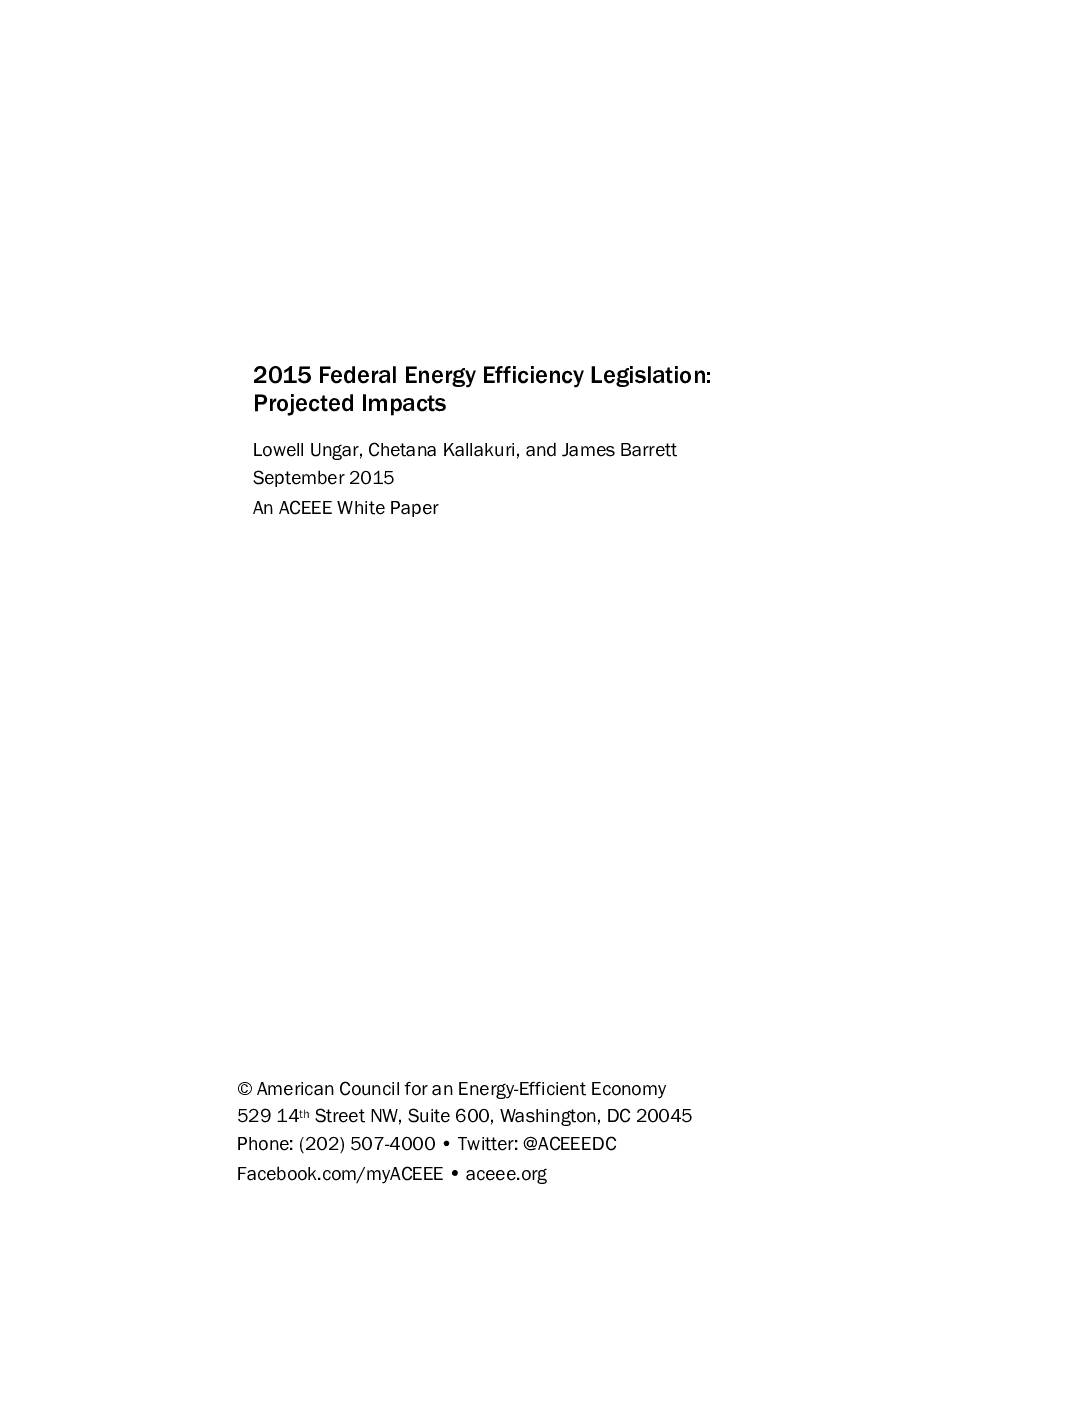 2015 Federal Energy Efficiency Legislation Projected Impacts